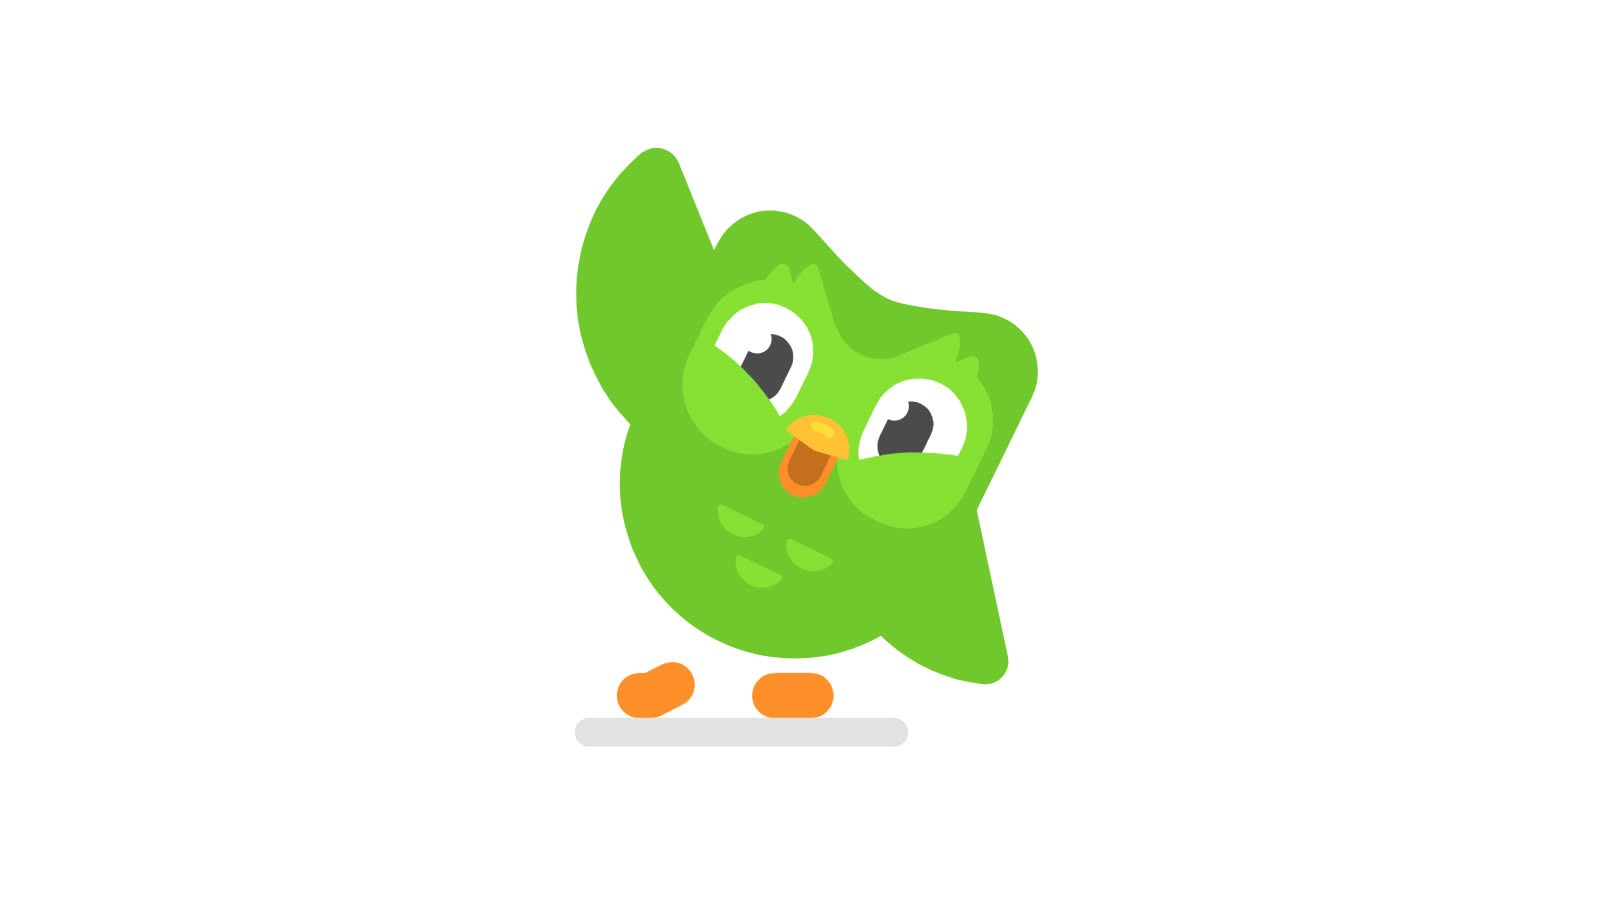 Duolingo learn. Зеленая Сова Дуолинго. Дуолинго дуо. Совенок доулинго. Duolingo логотип.